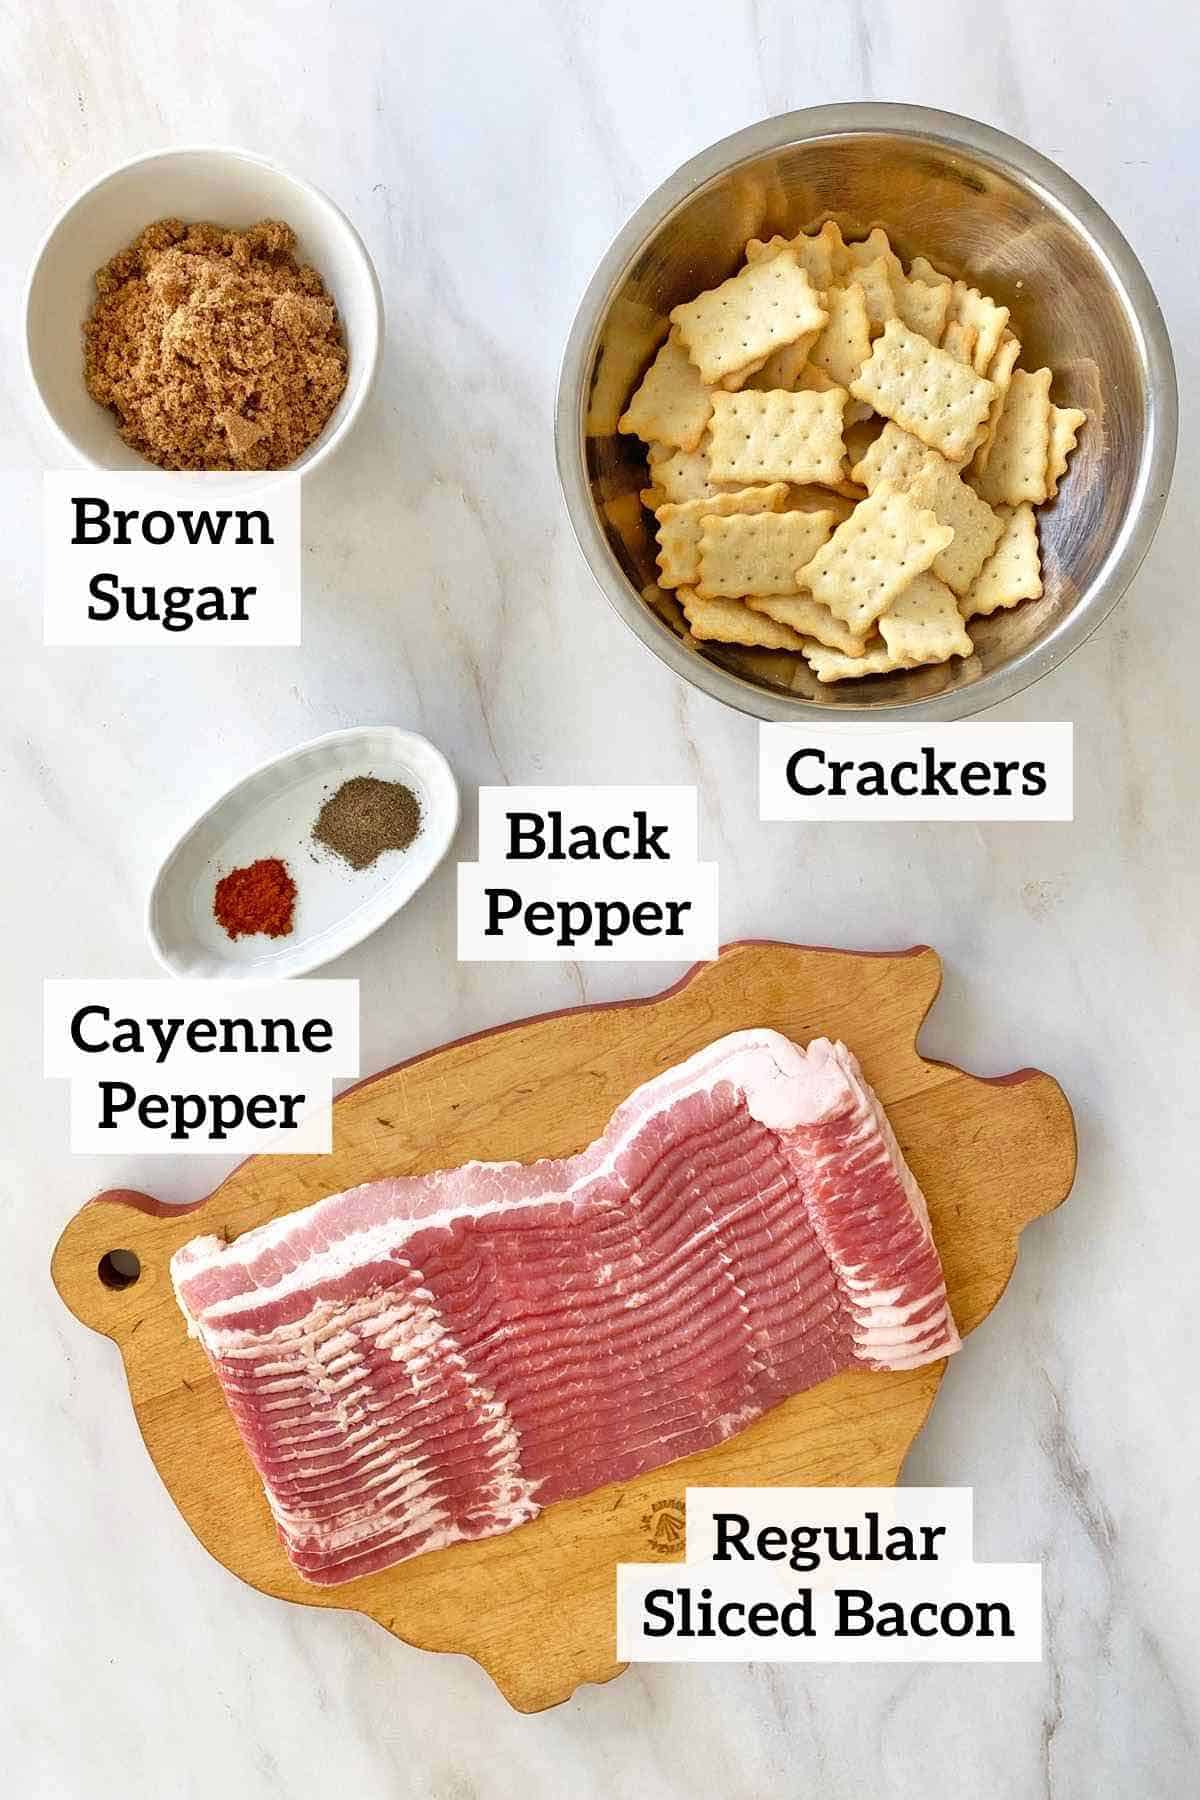 Crackers, brown sugar, seasonings and regular sliced bacon on a cutting board.